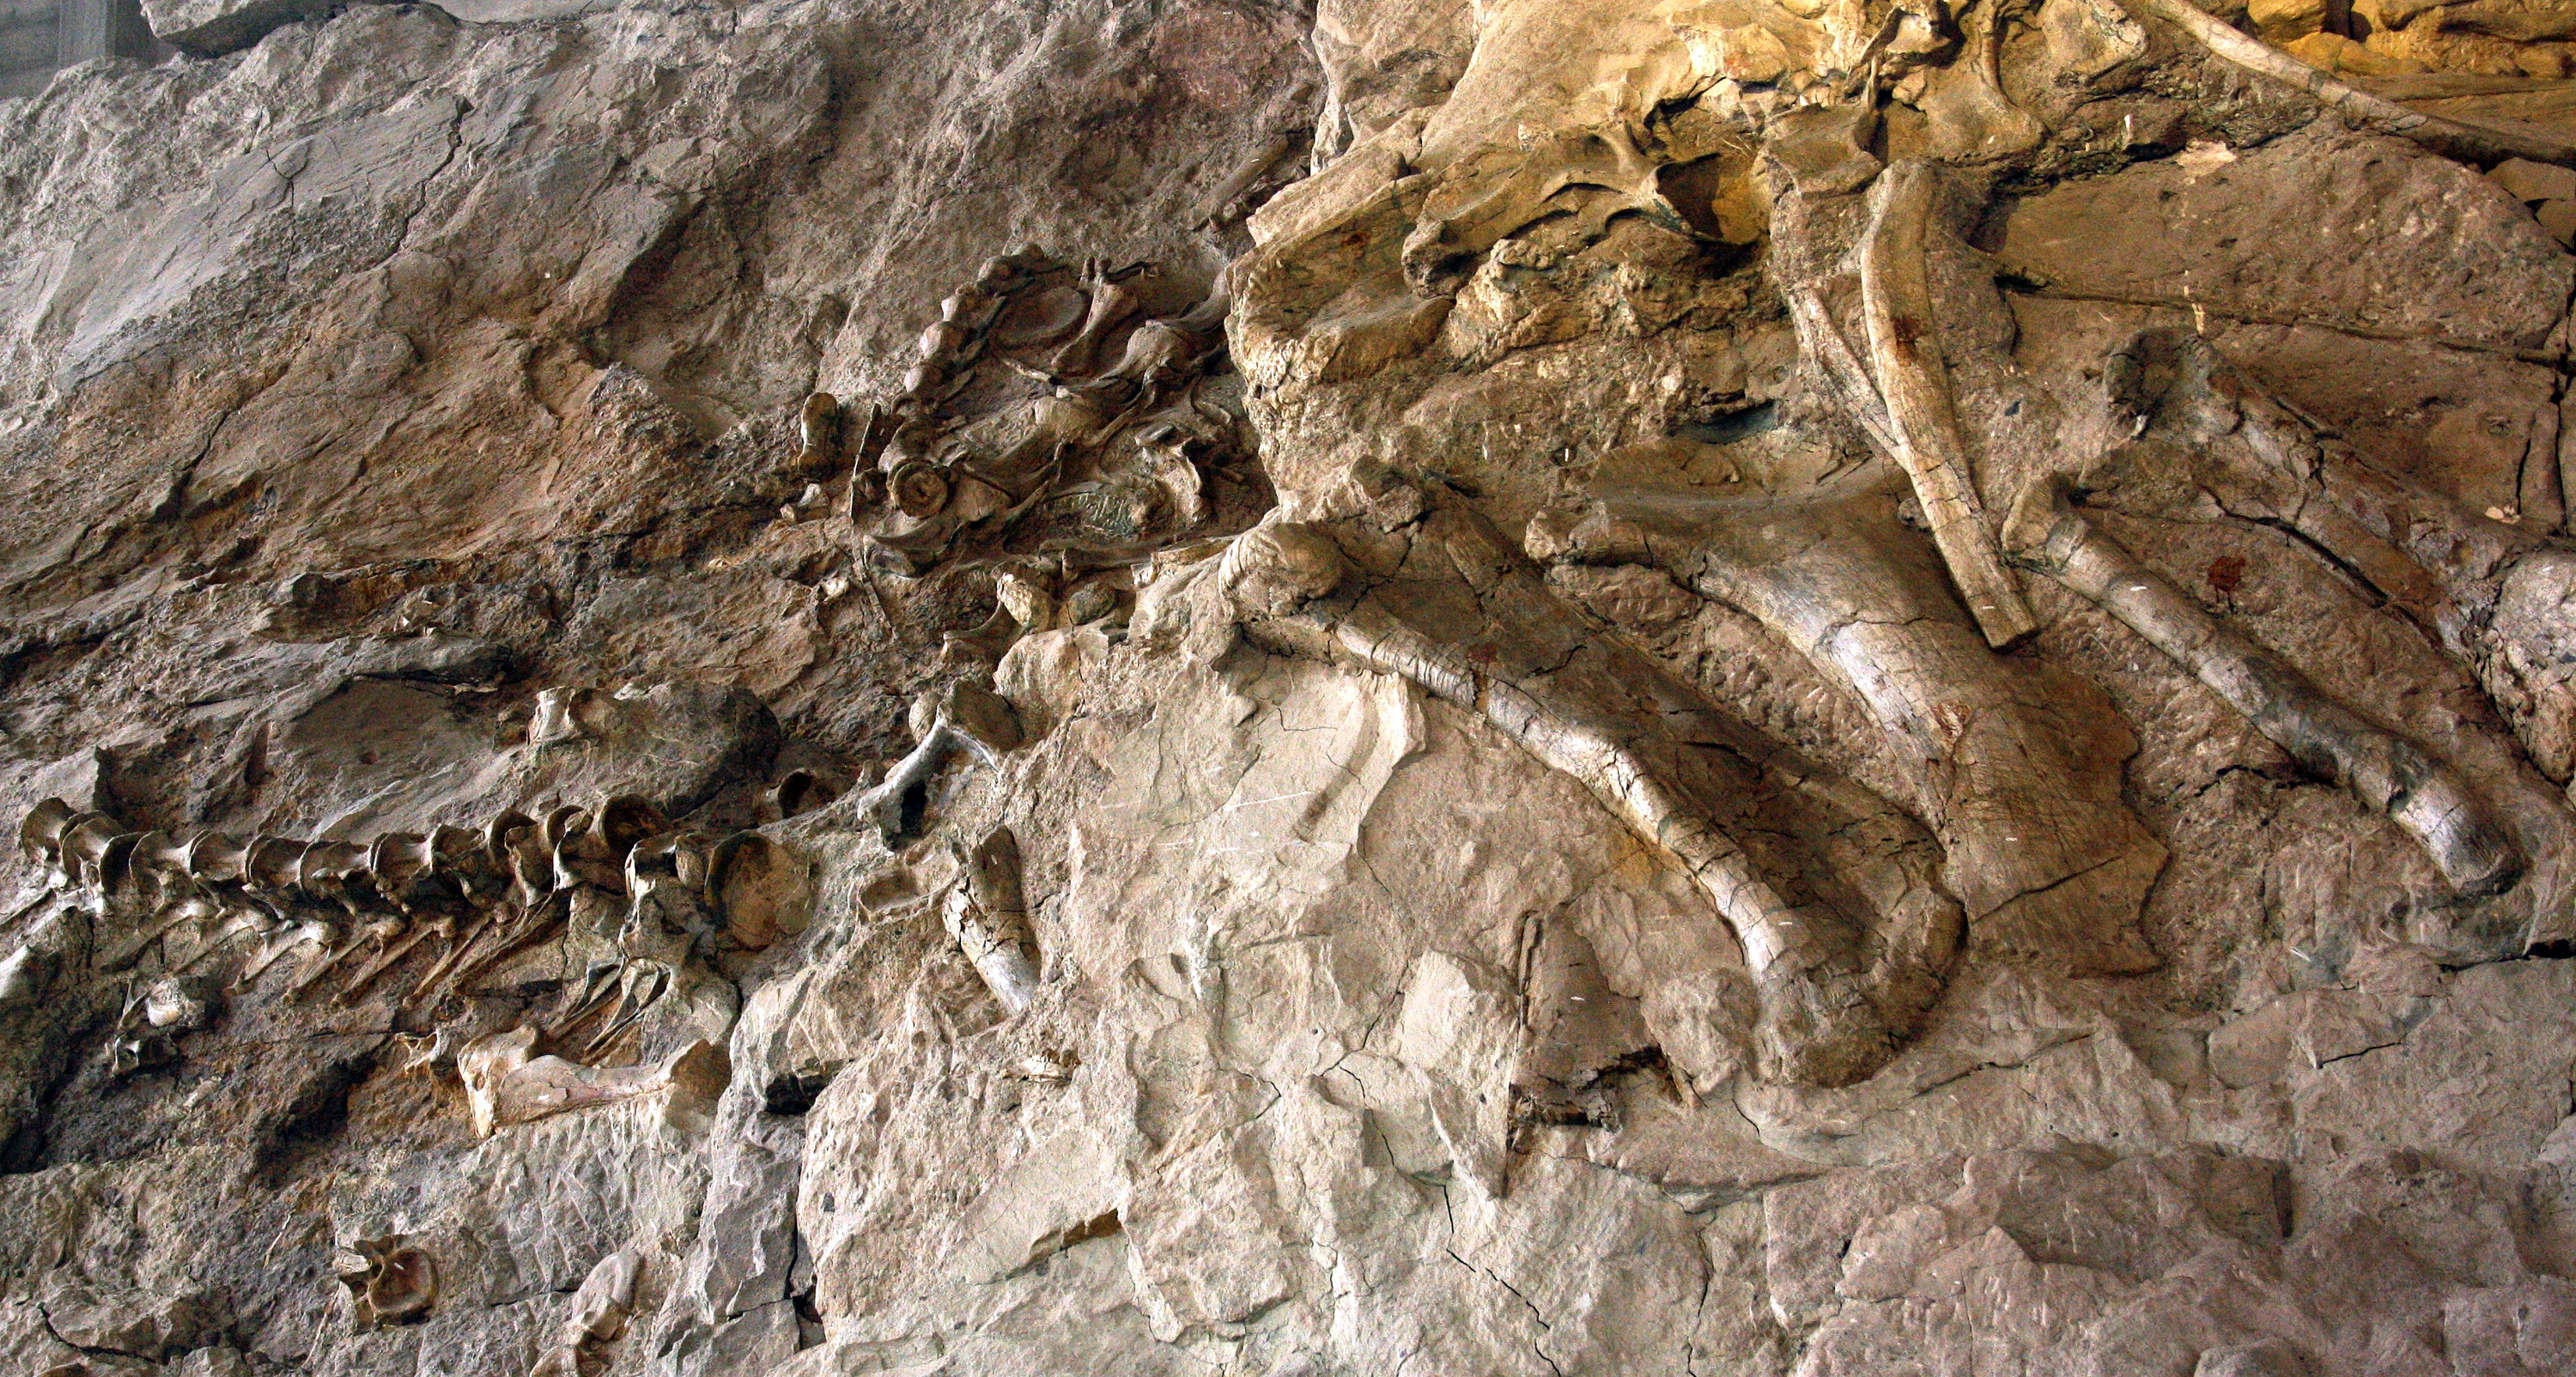 Fossilized dinosaur bones encased in prehistoric rock.